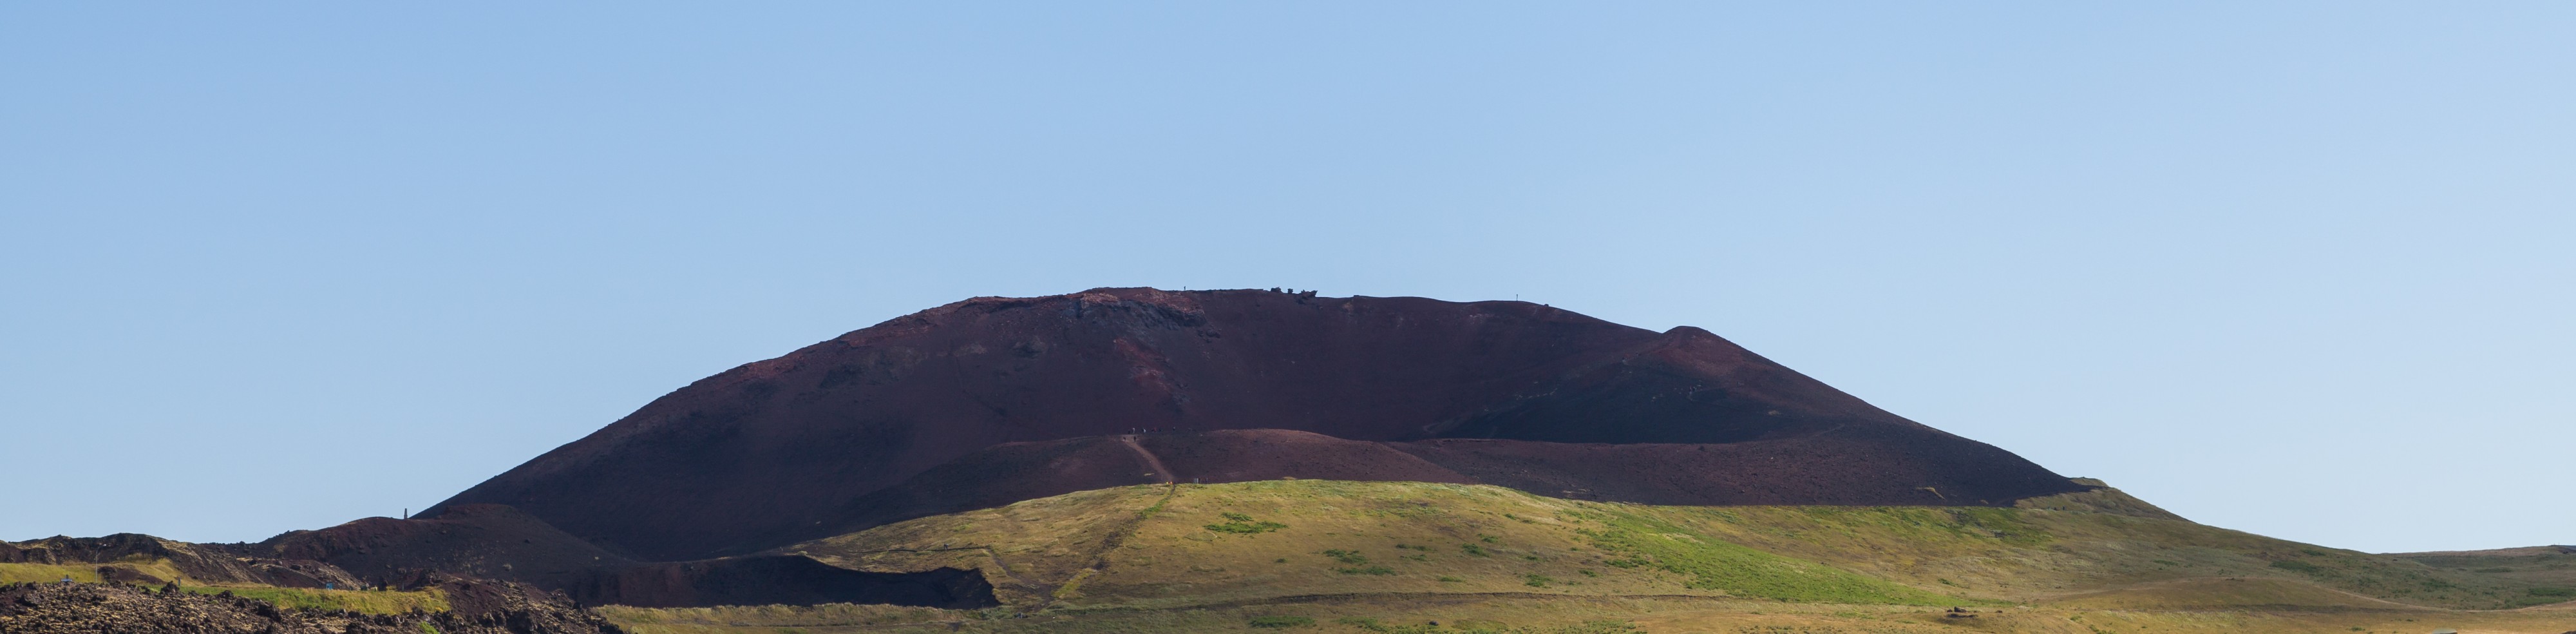 Eldfell, Heimaey, Islas Vestman, Suðurland, Islandia, 2014-08-17, DD 096